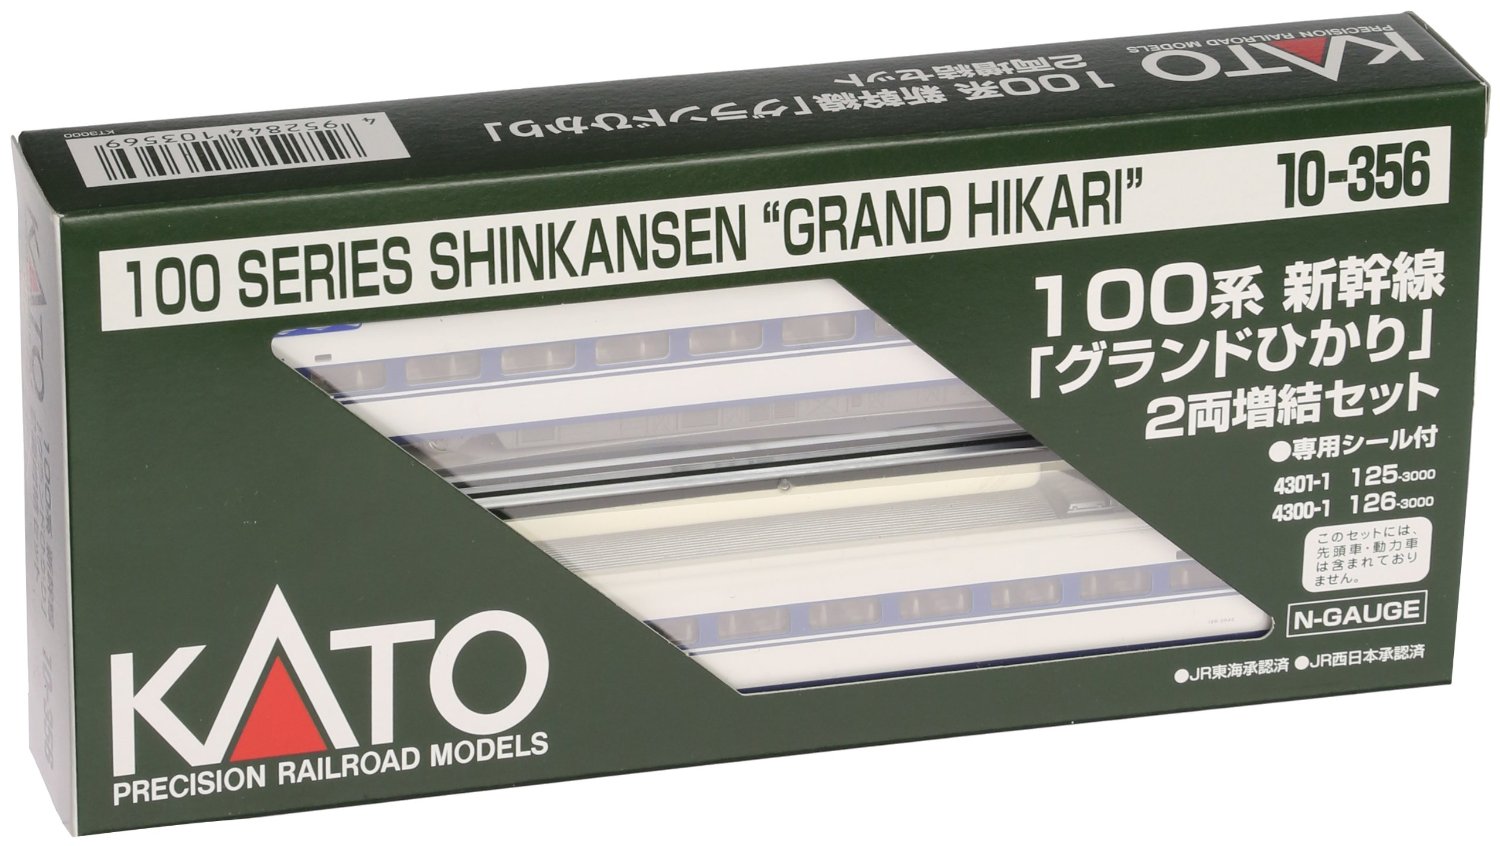 10-356 Series 100 Grand Hikari Shinkansen 2 Car Add-On set